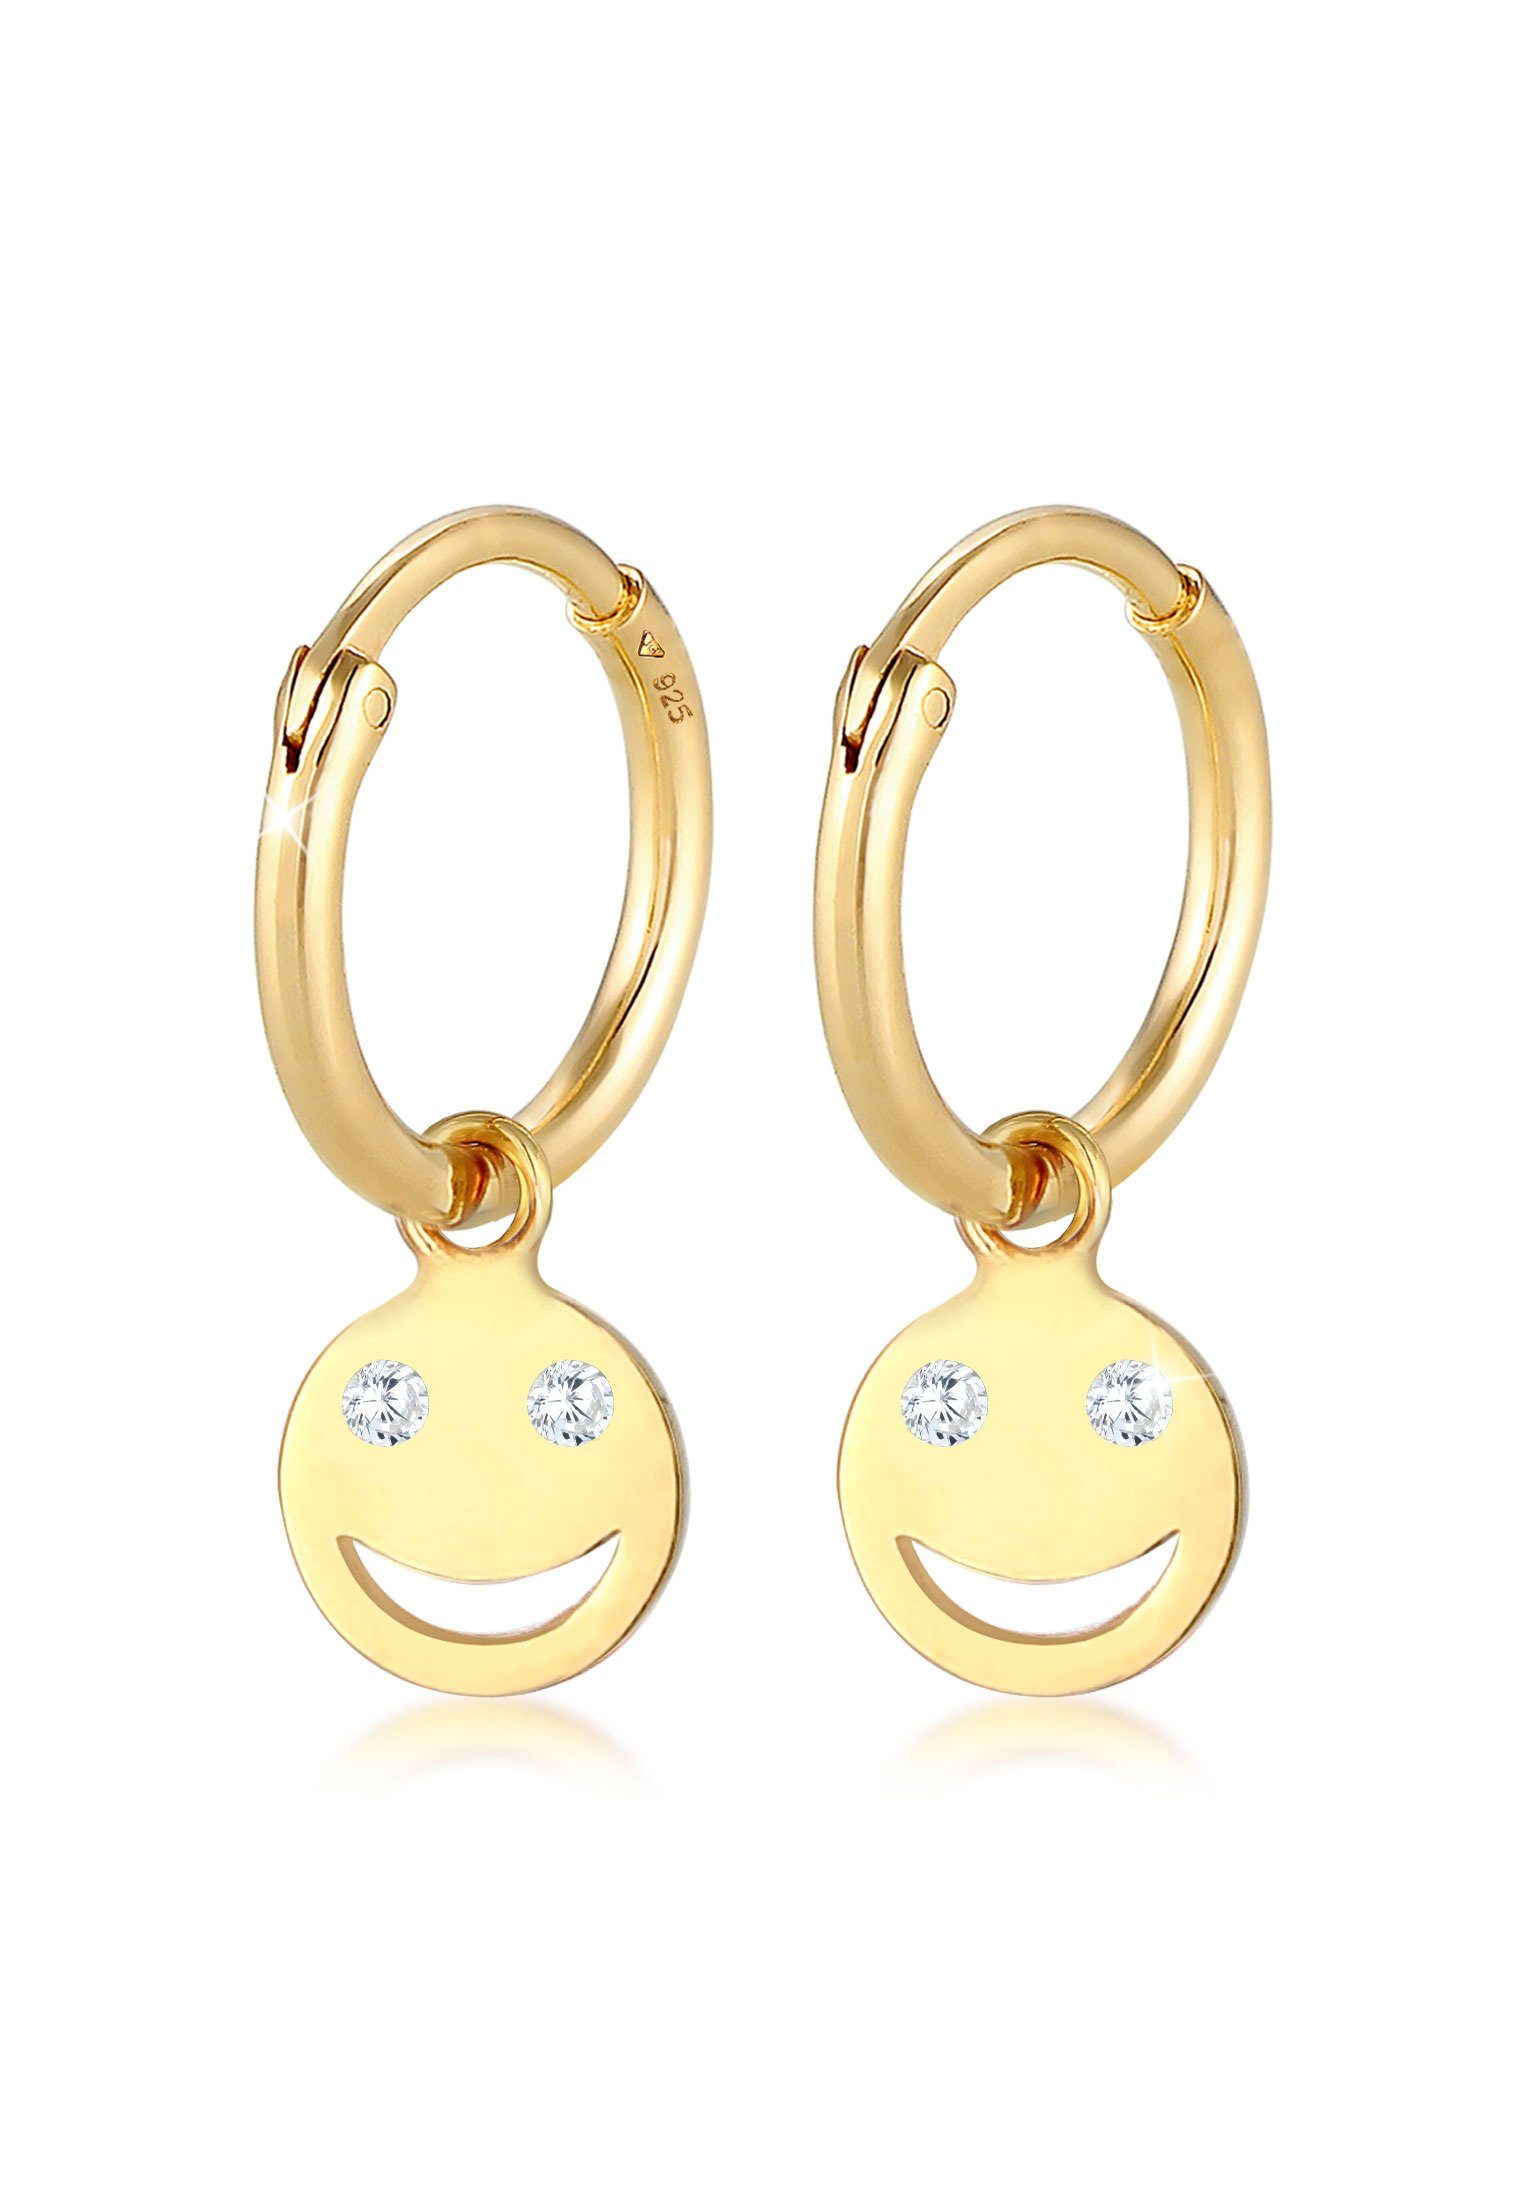 Elli Paar Creolen Creolen Trend Smiling Plättchen 925 Silber Gold